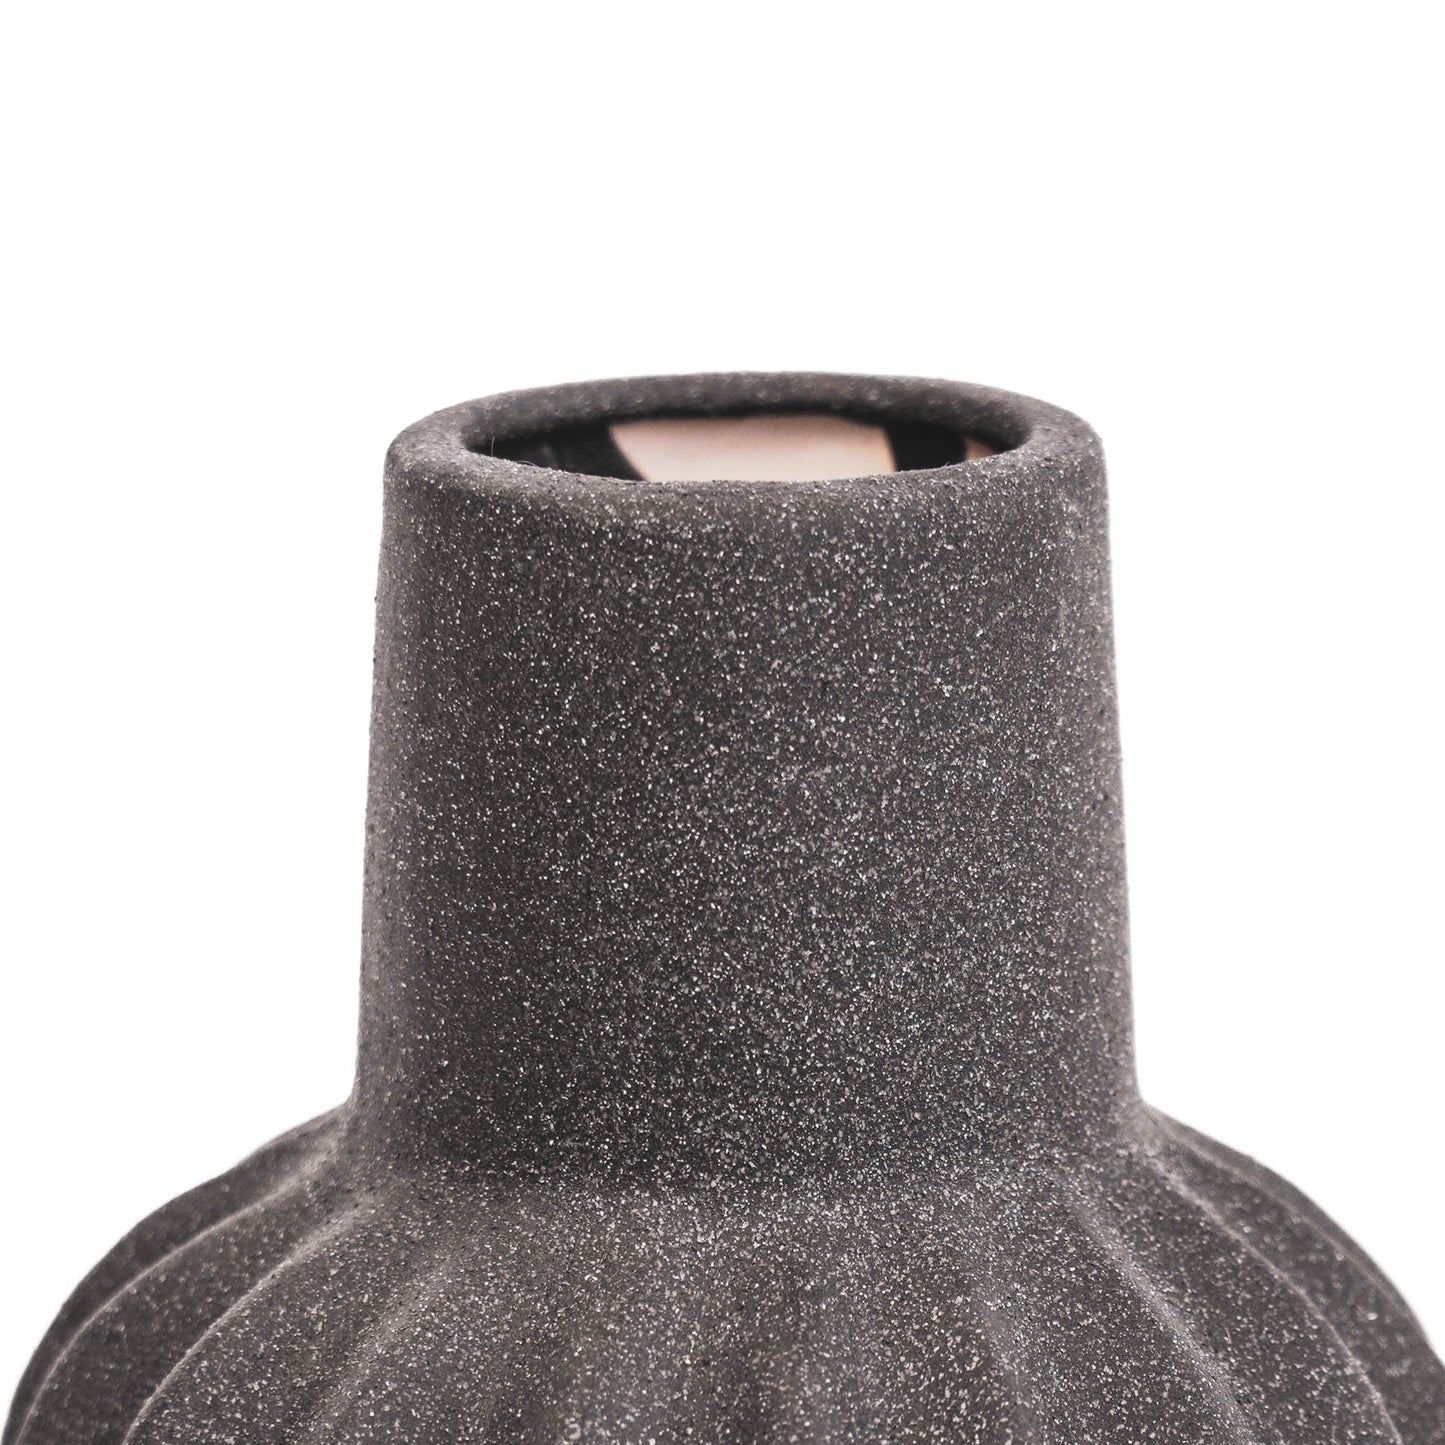 HV Organic Shape Vase - Black -15x15x24